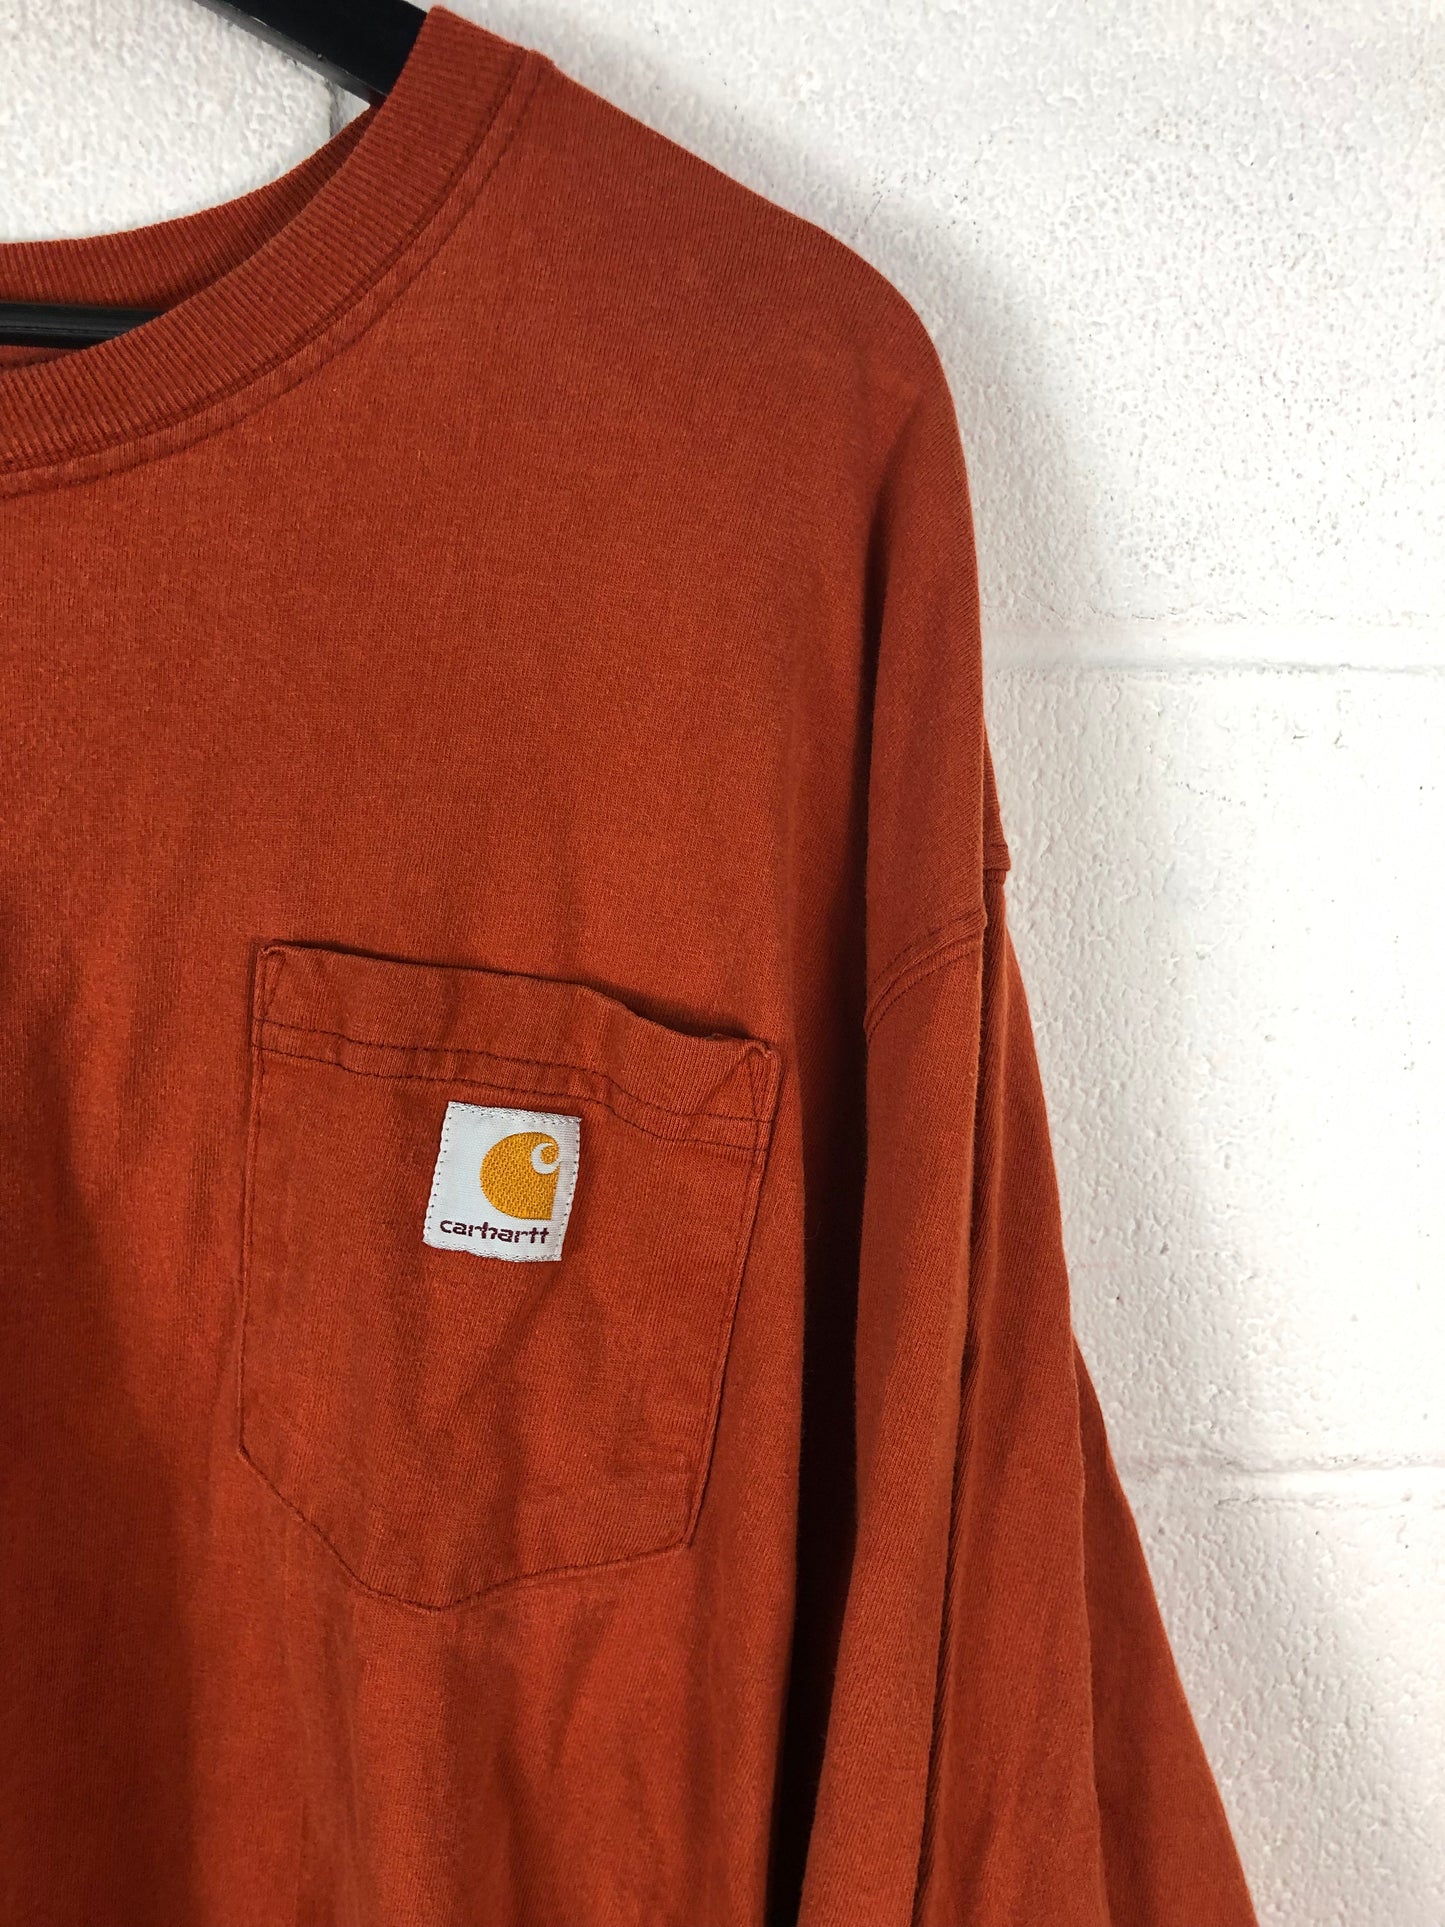 Carhartt Orange Pocket LS Shirt Sz 3XL